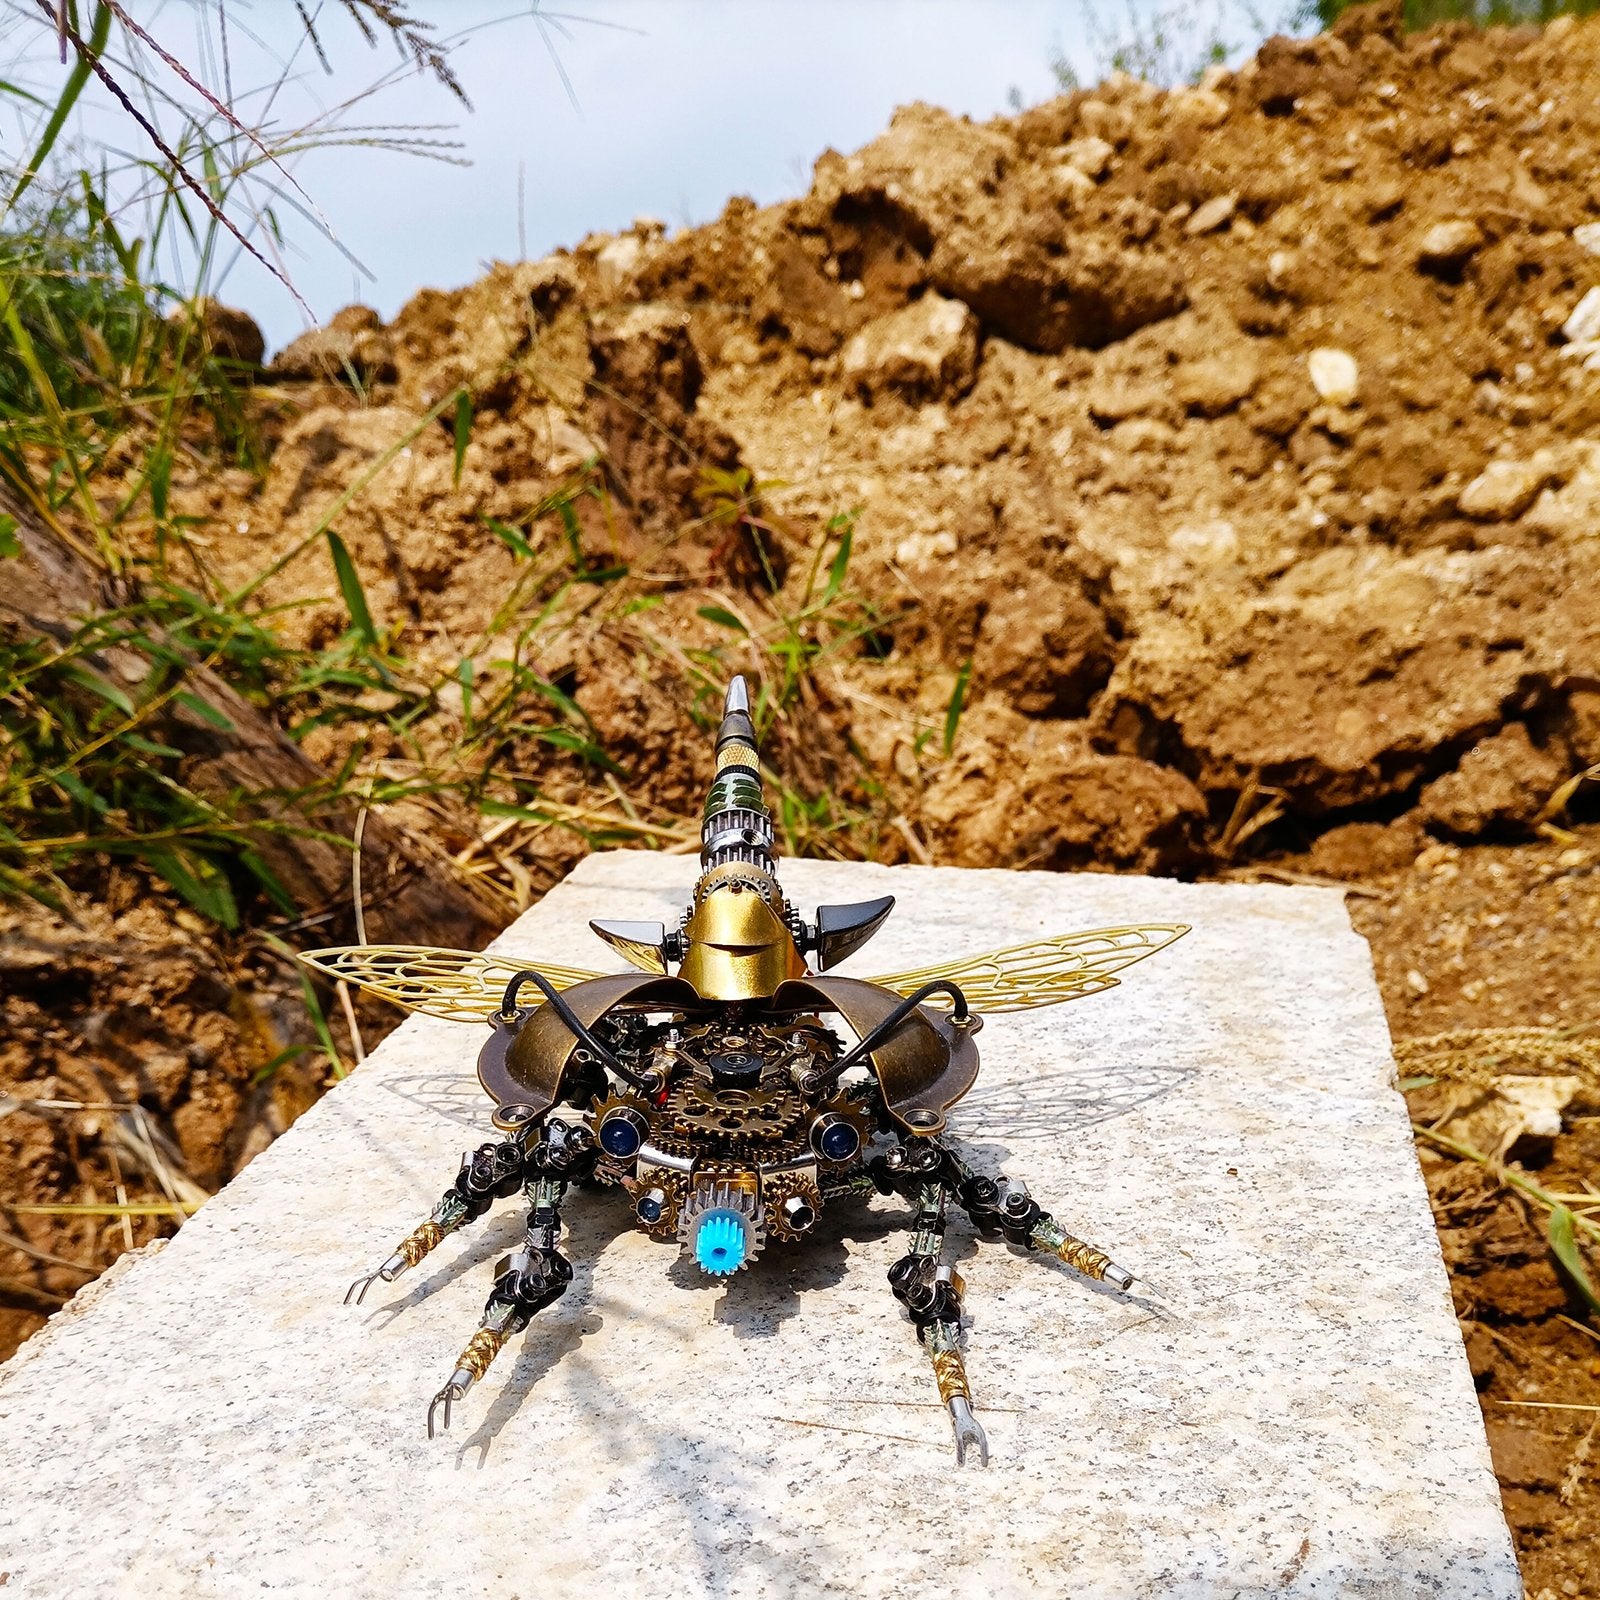 Assembly DIY 3D Metal Mechanical War Beetle With Sound Control Light